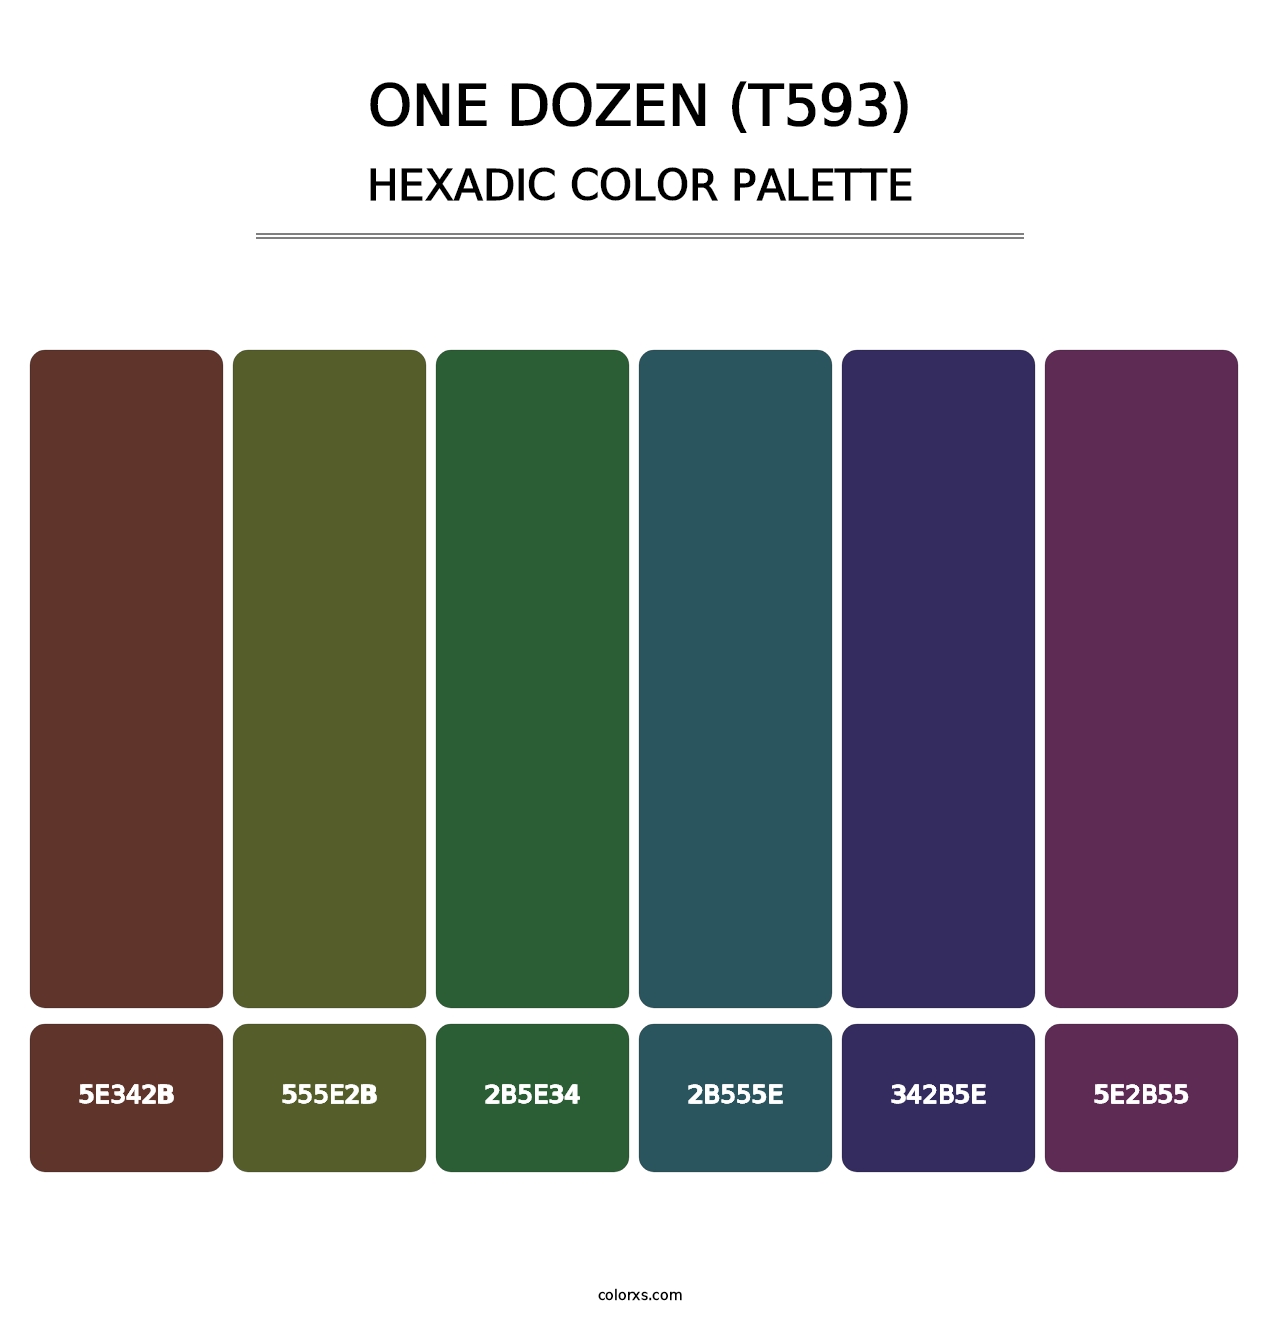 One Dozen (T593) - Hexadic Color Palette